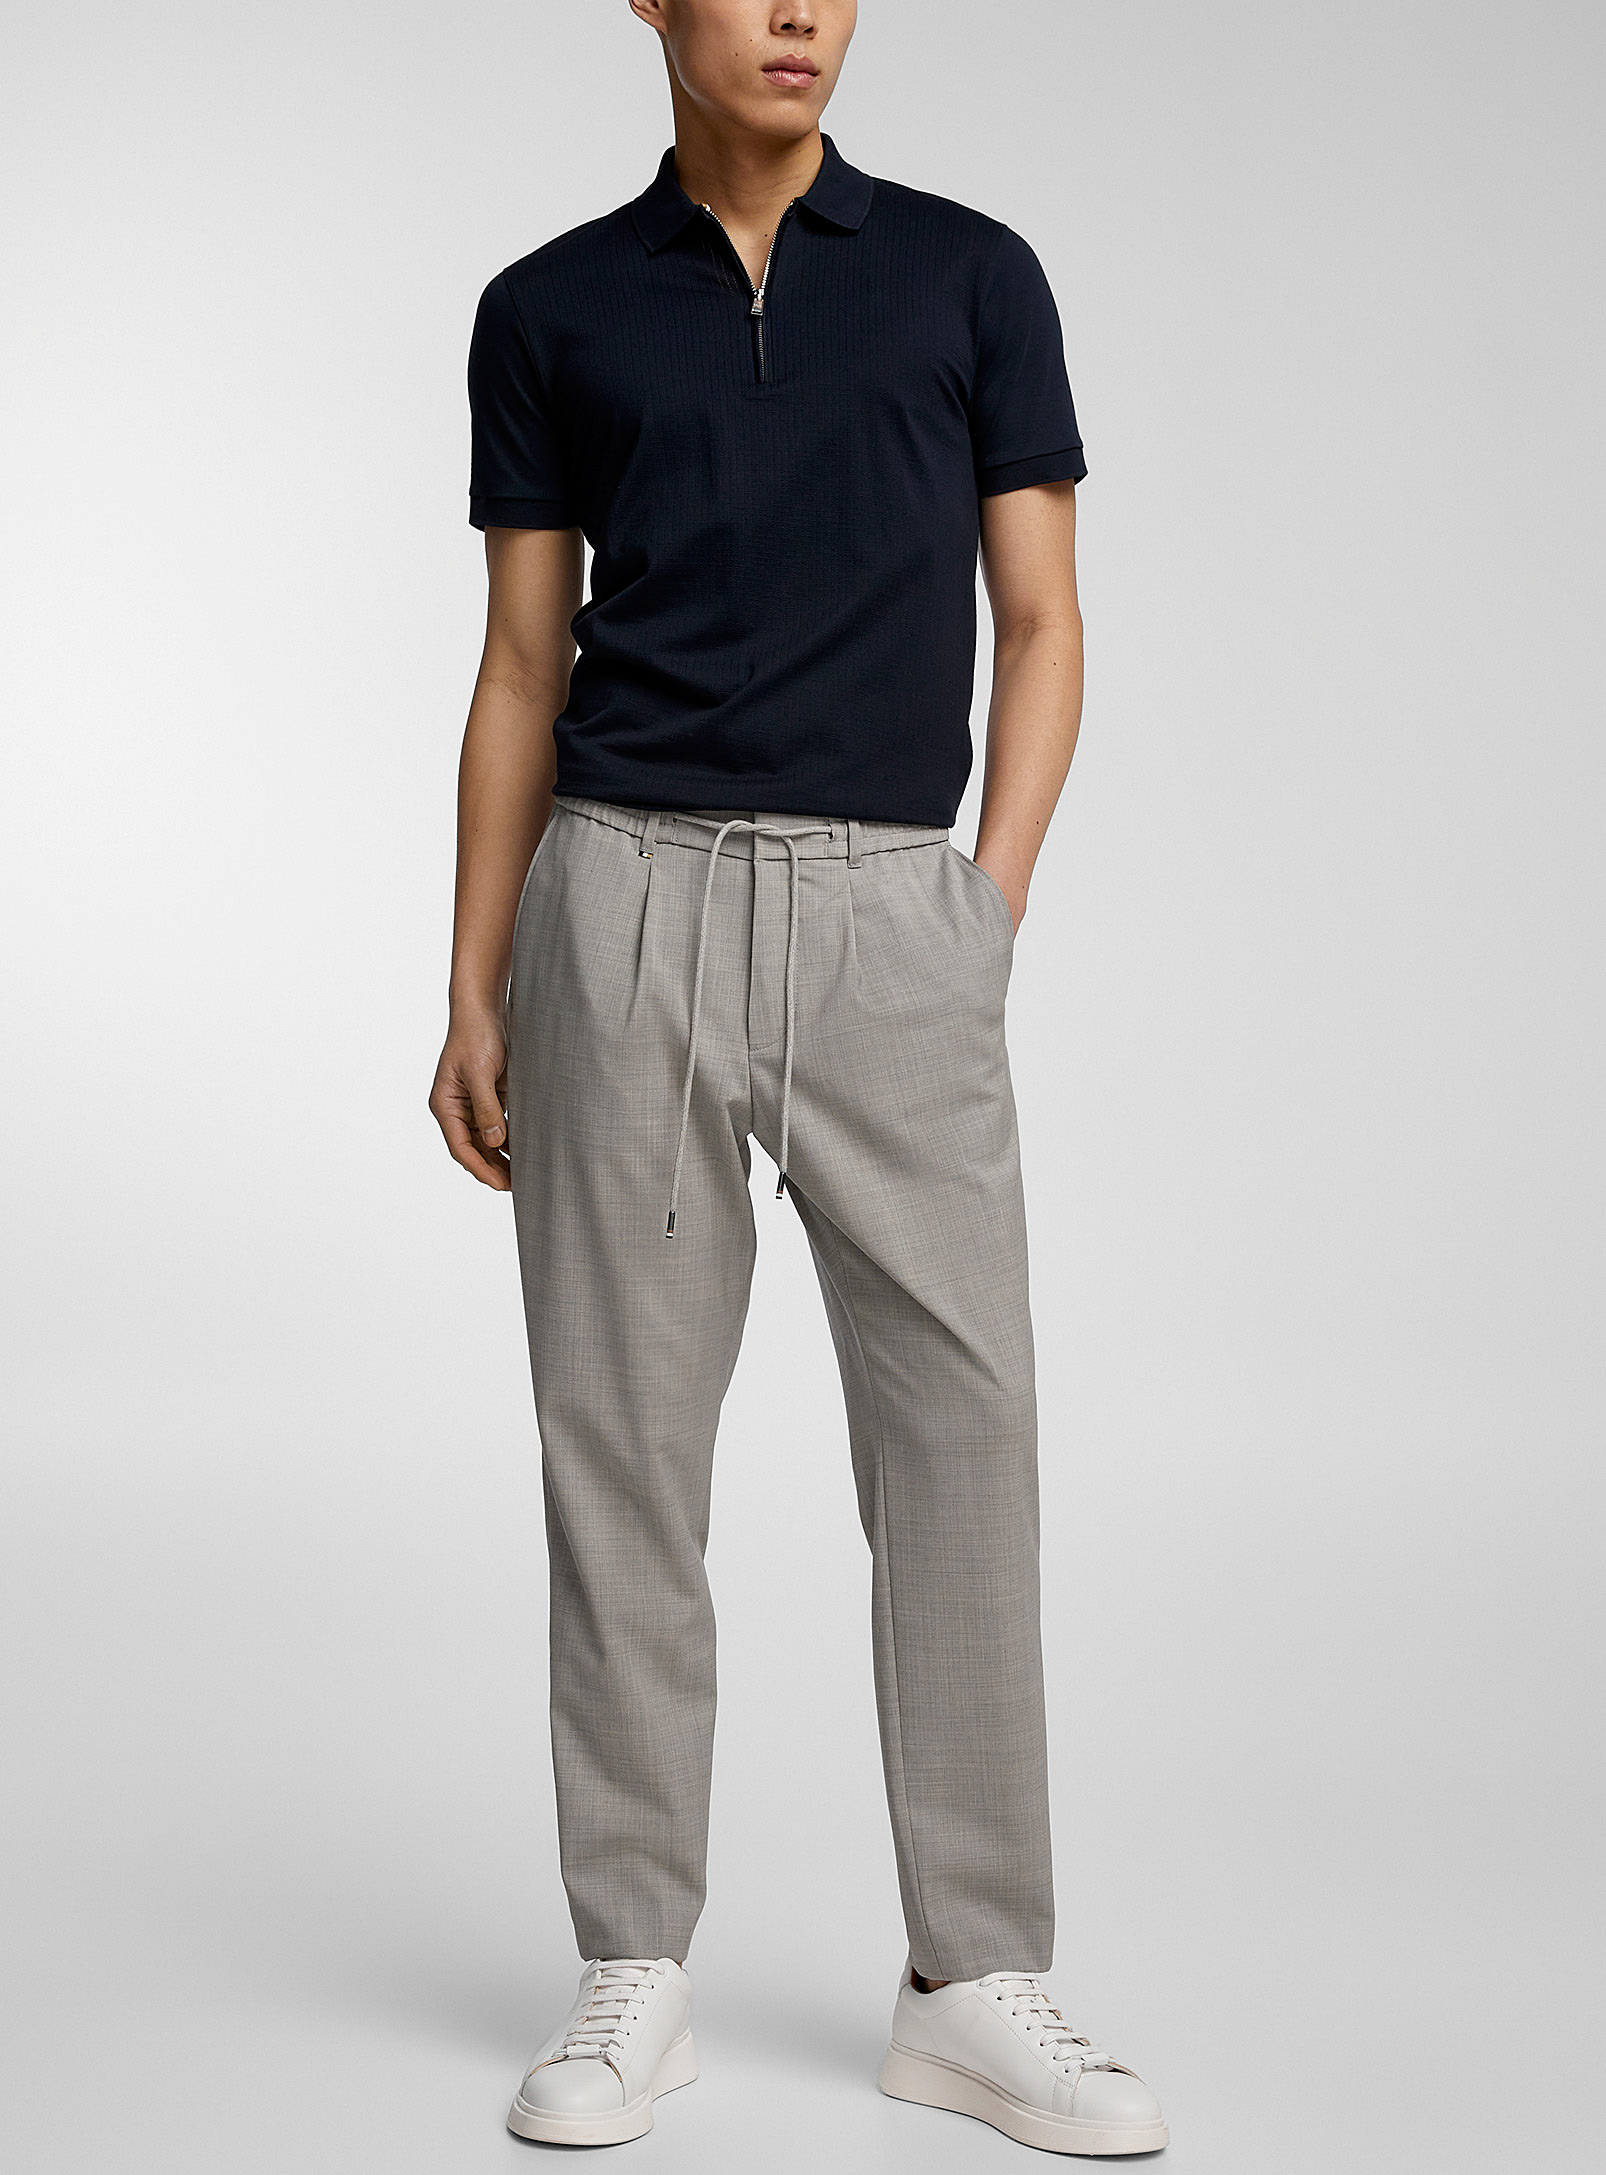 BOSS - Men's Elastic-waist light grey pant